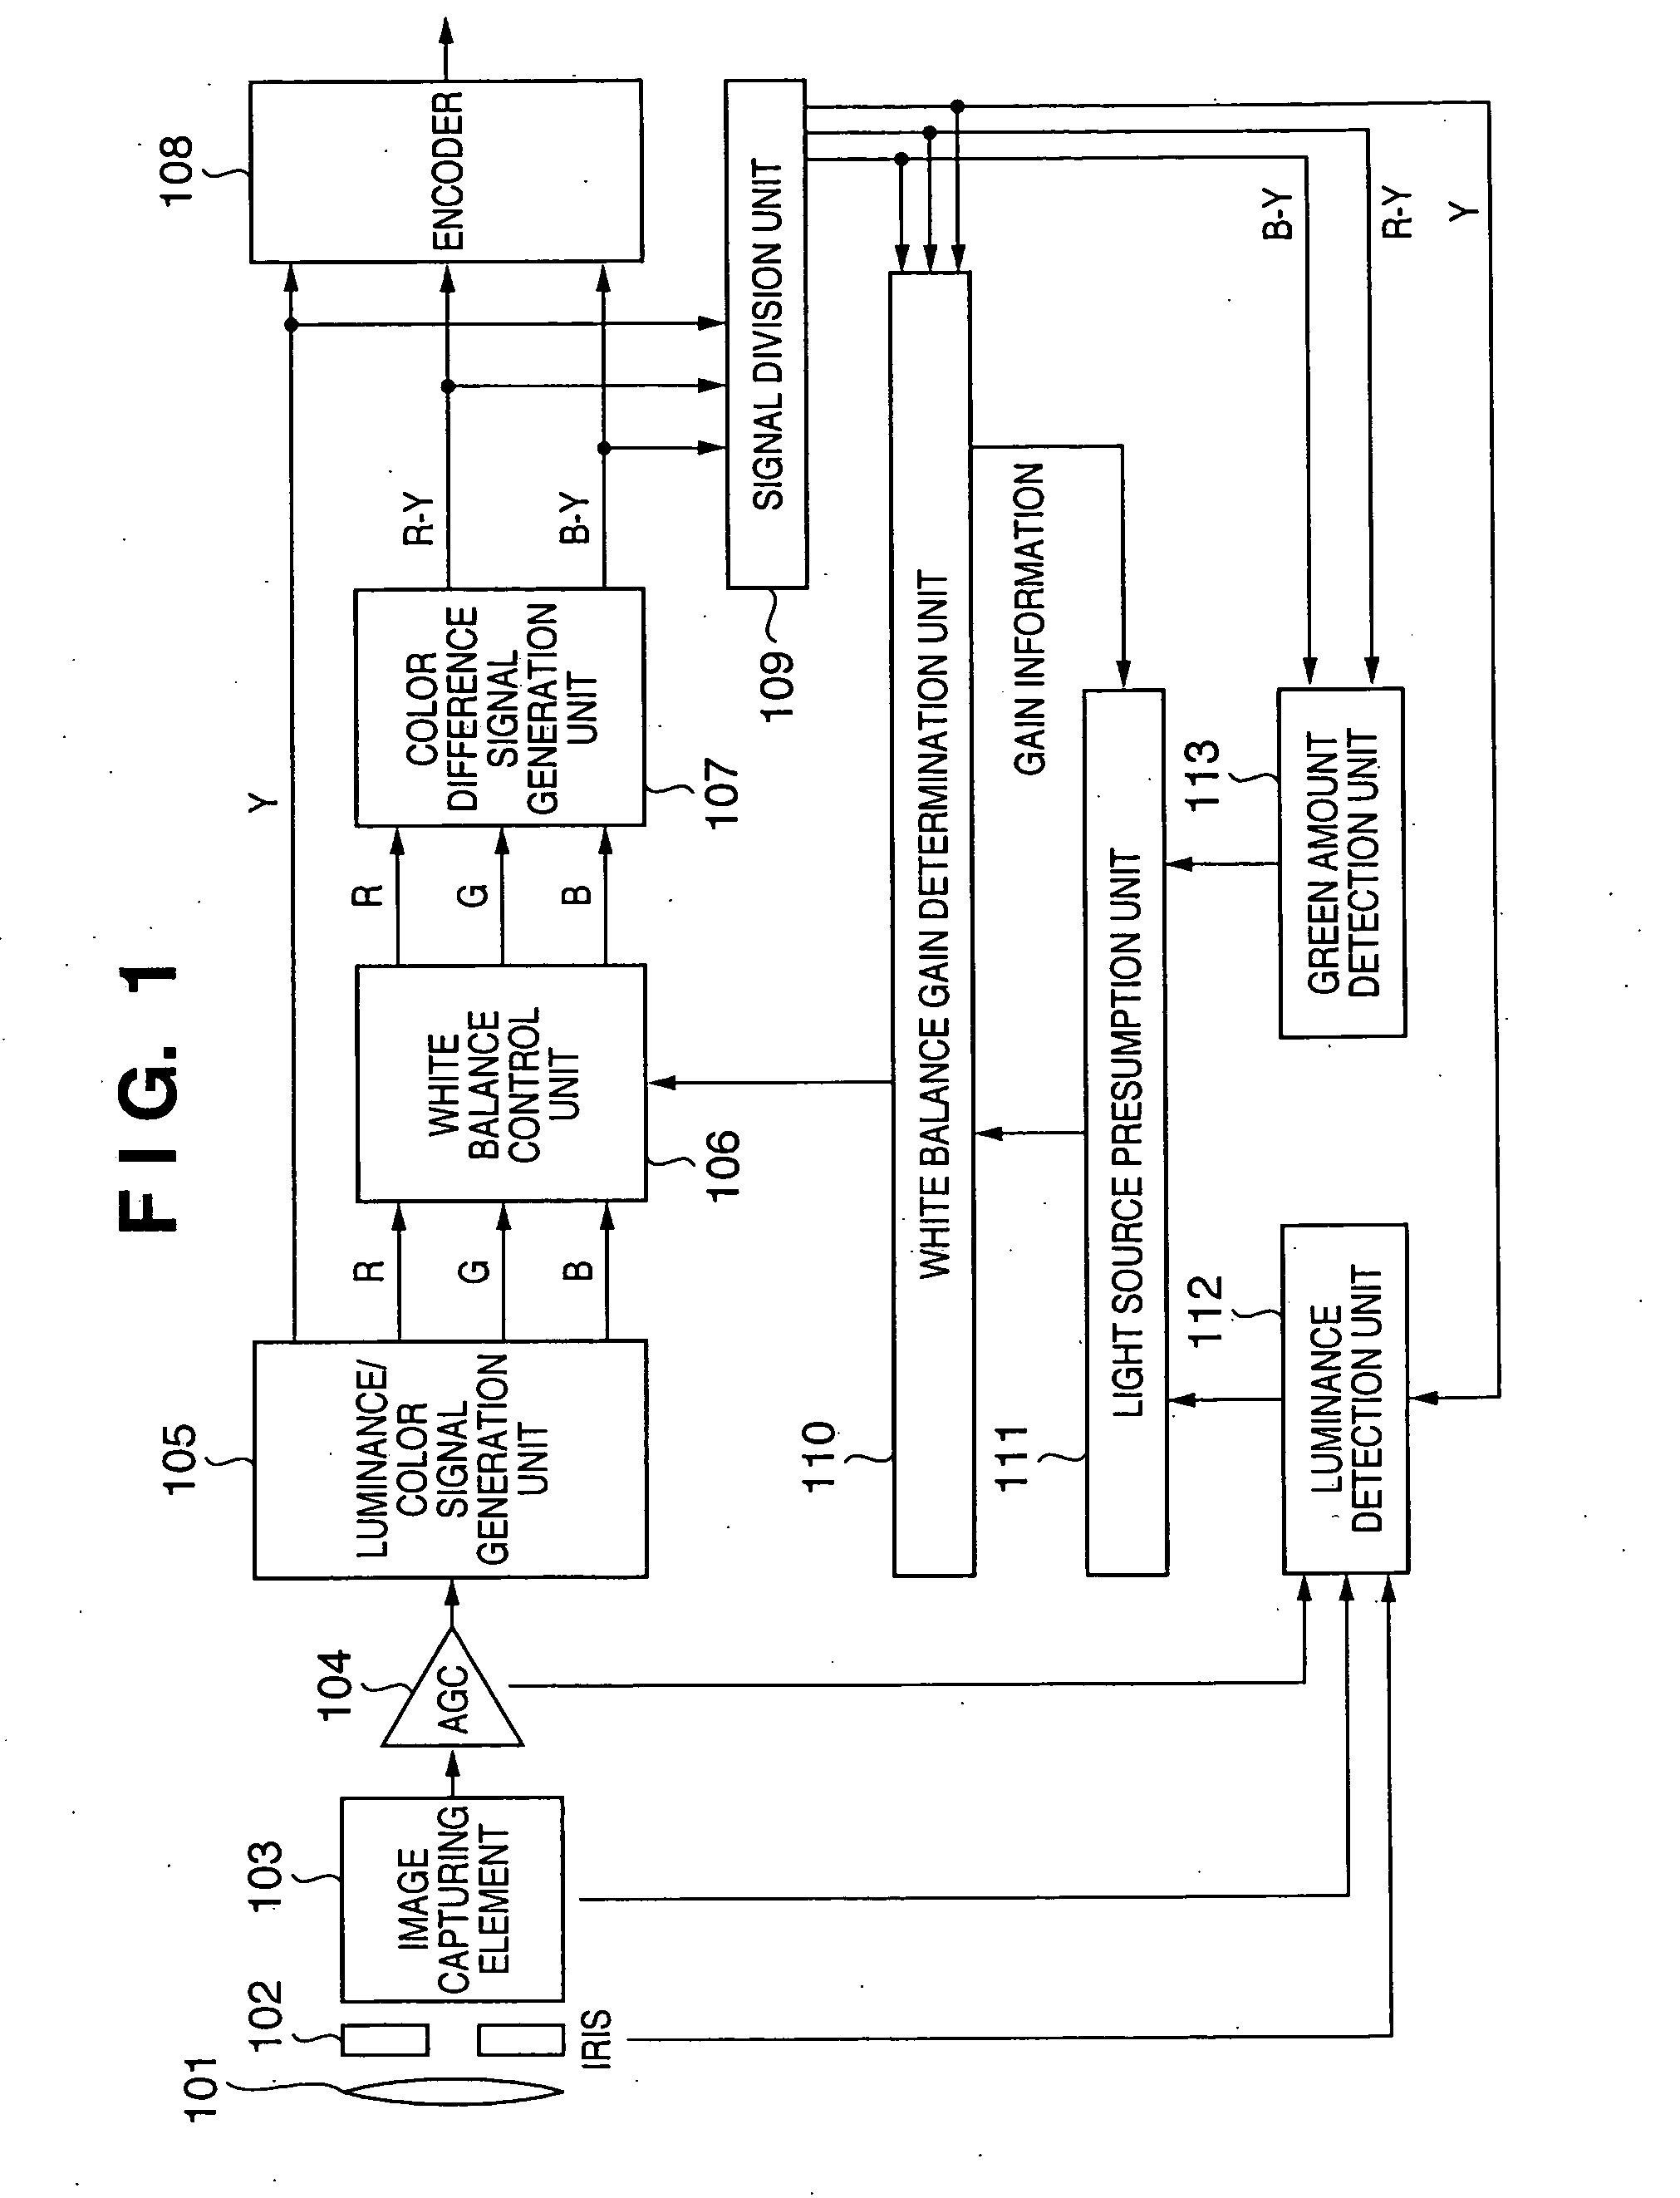 Image processing apparatus, method, and computer program